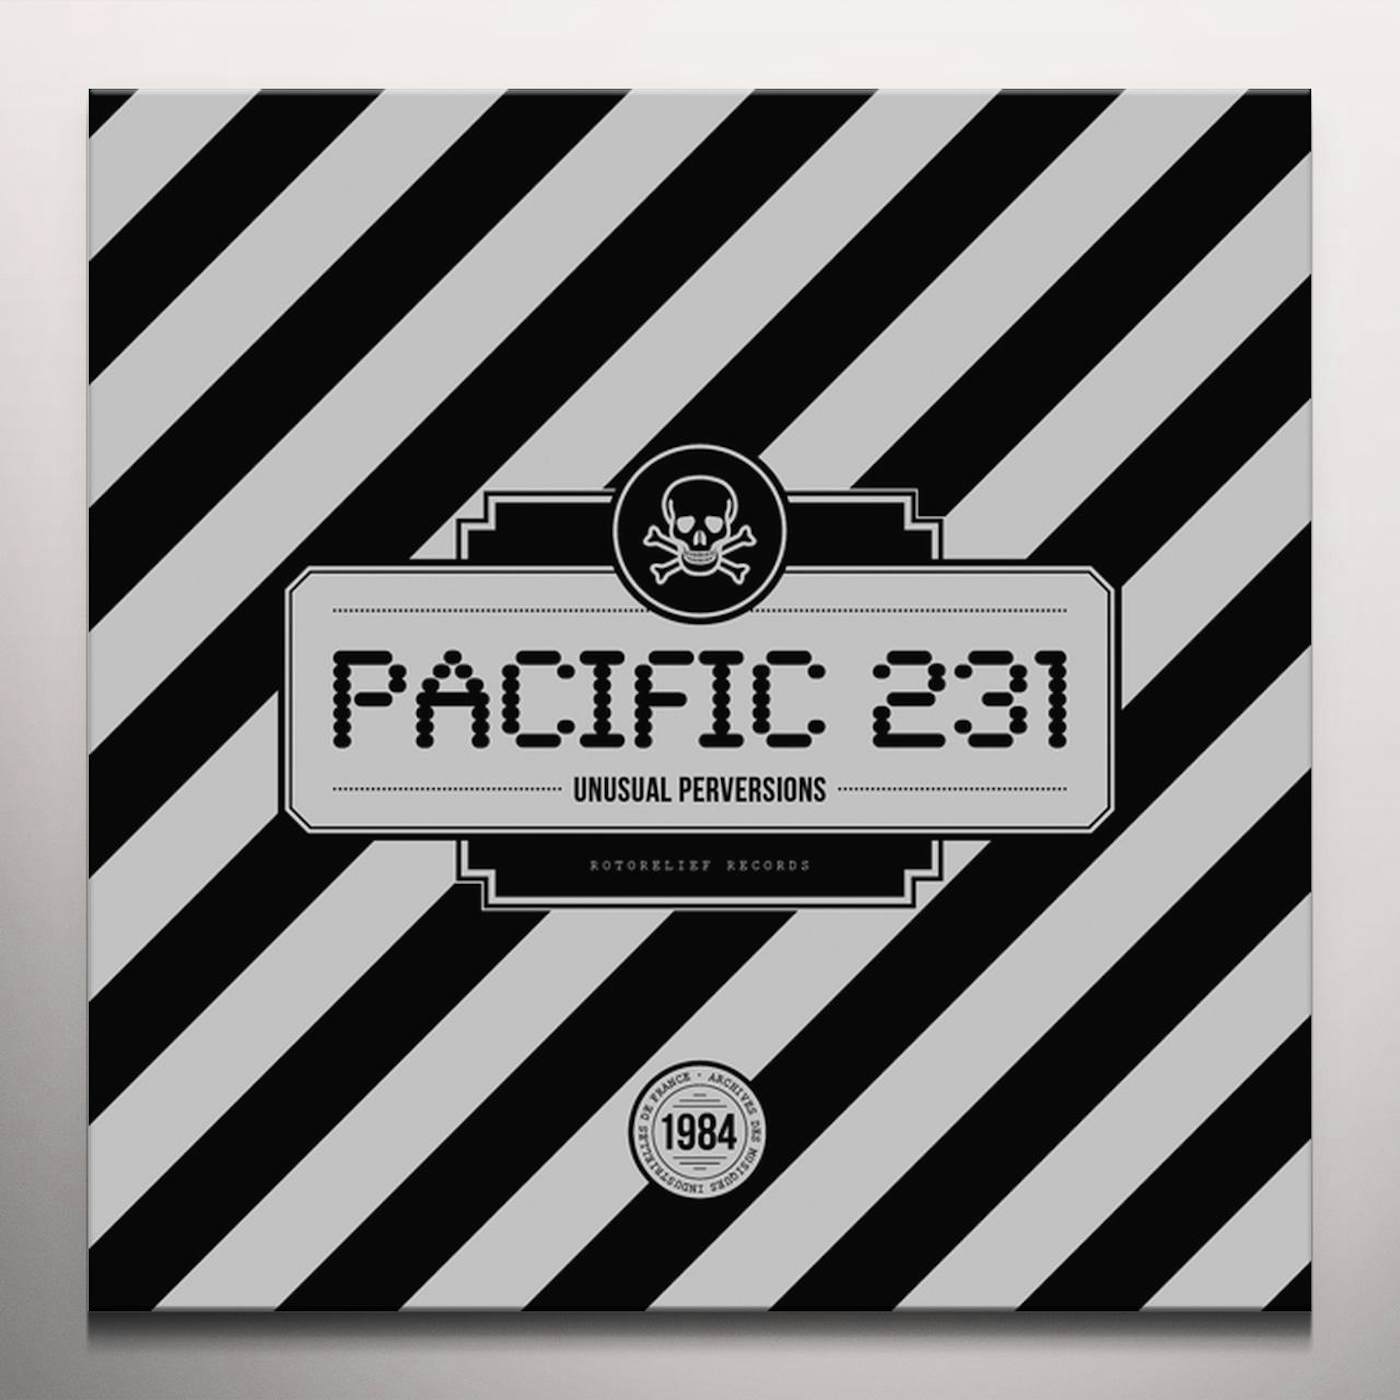 Pacific 231 Unusual Perversions Vinyl Record